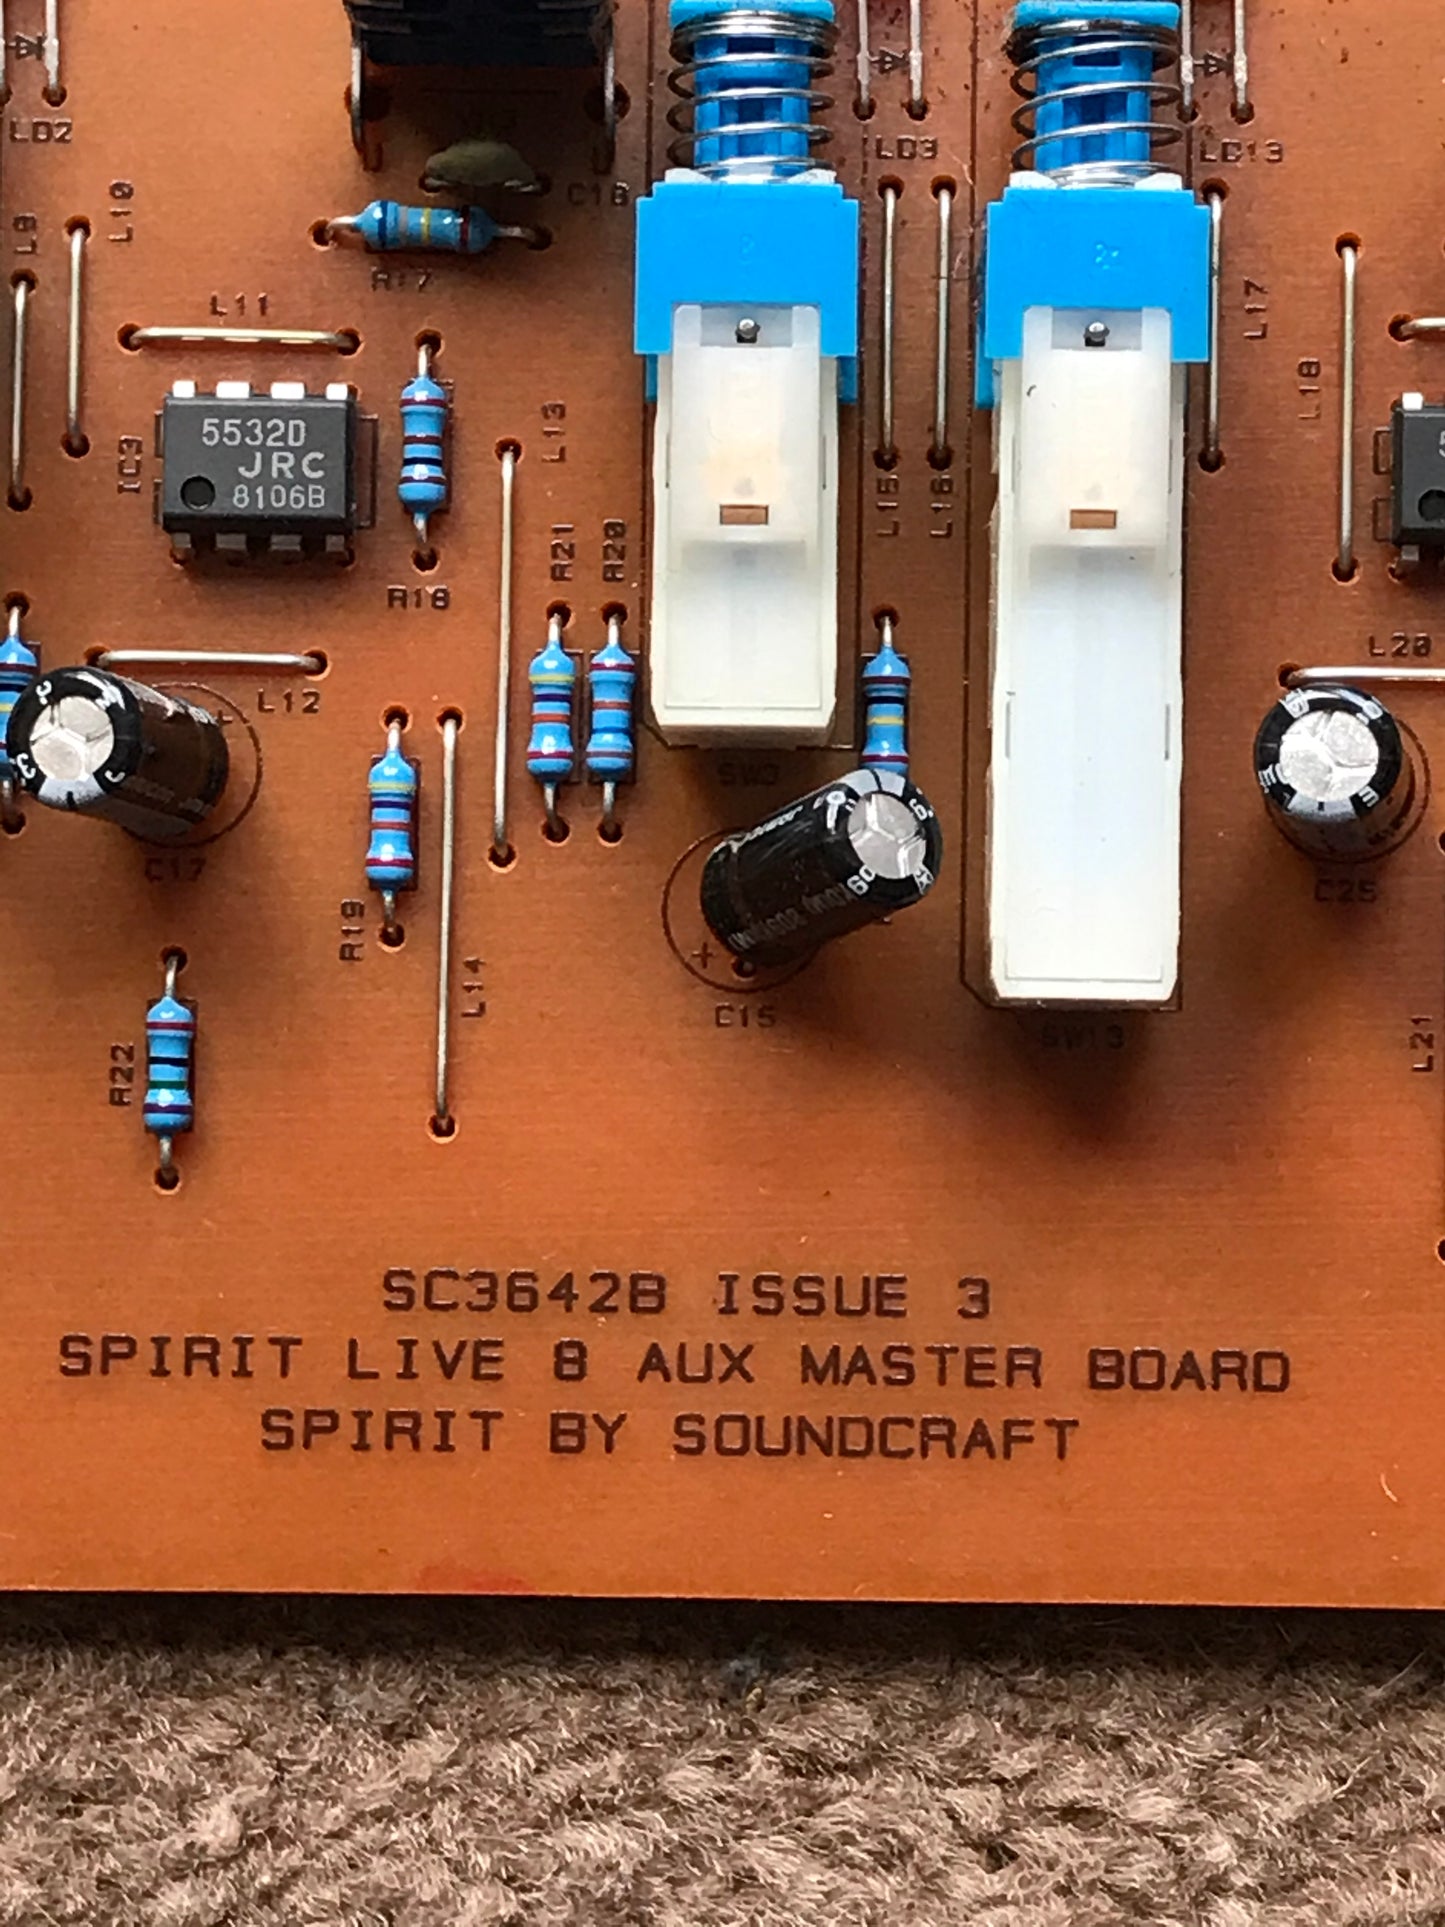 Soundcraft spirit 8 live 8 SC3642B AUX Master PCB Issue 3